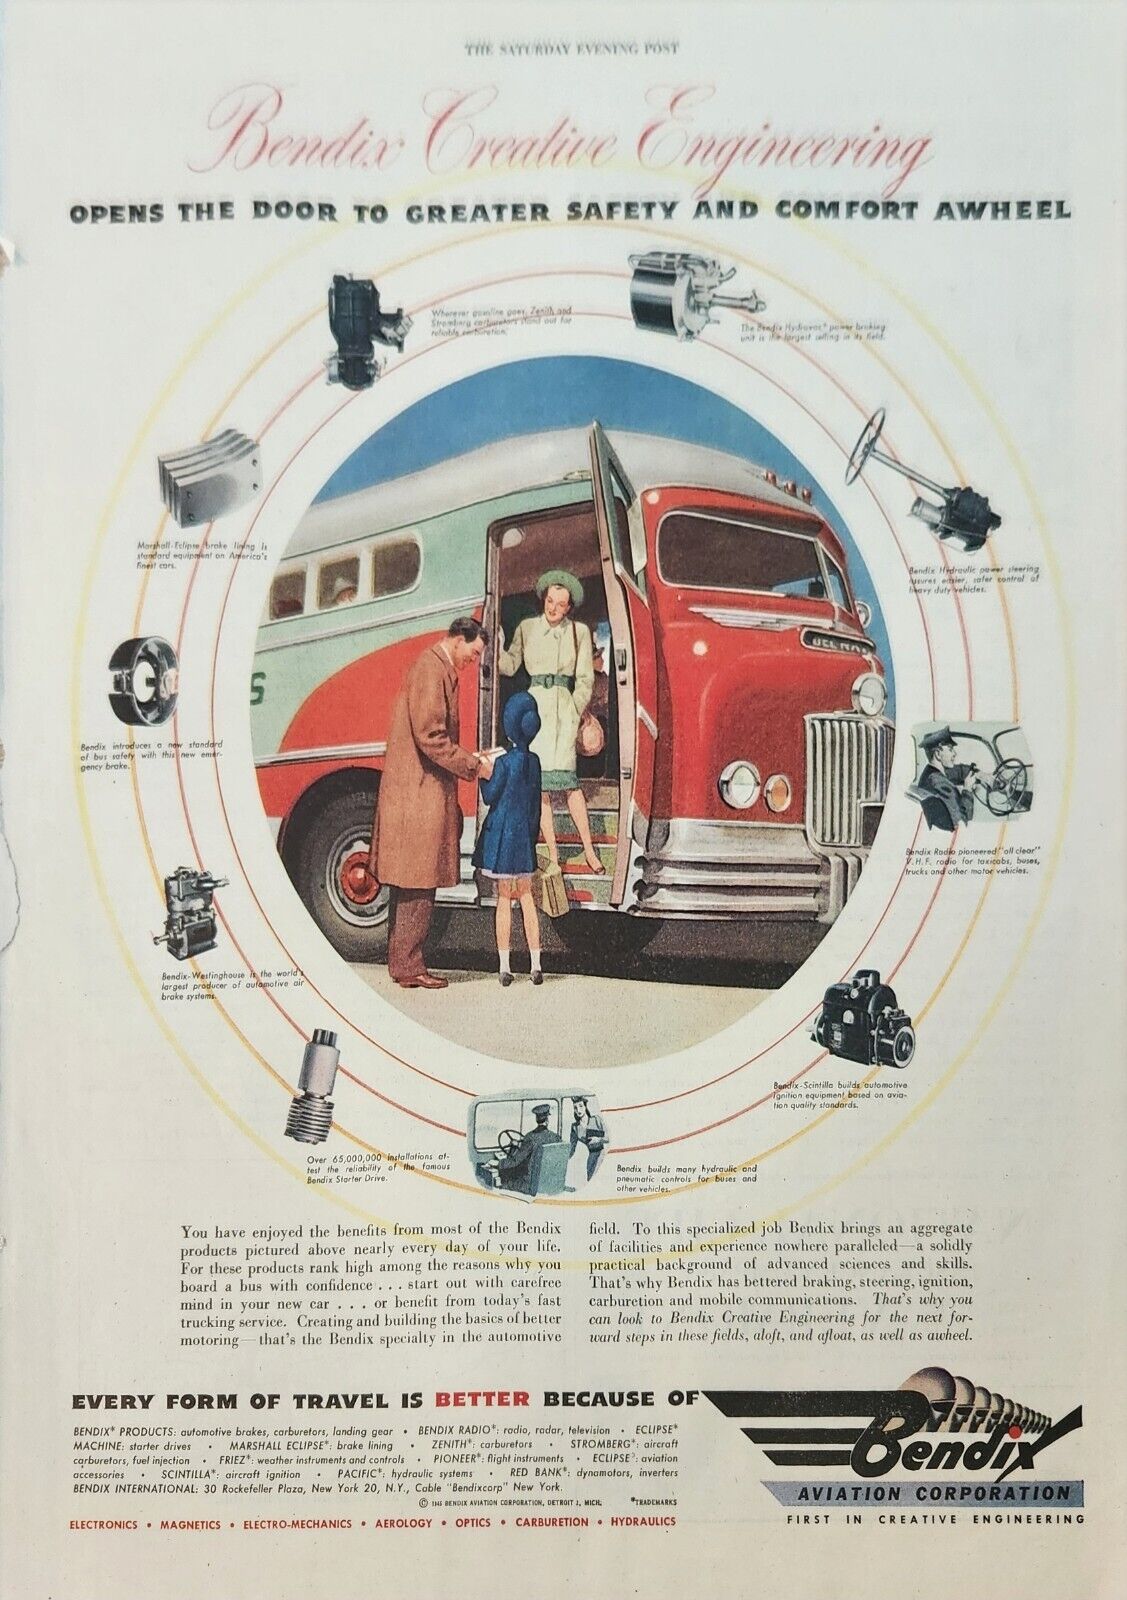 1946 Bendix Aviation Corporation Vintage Ad creative Engineering